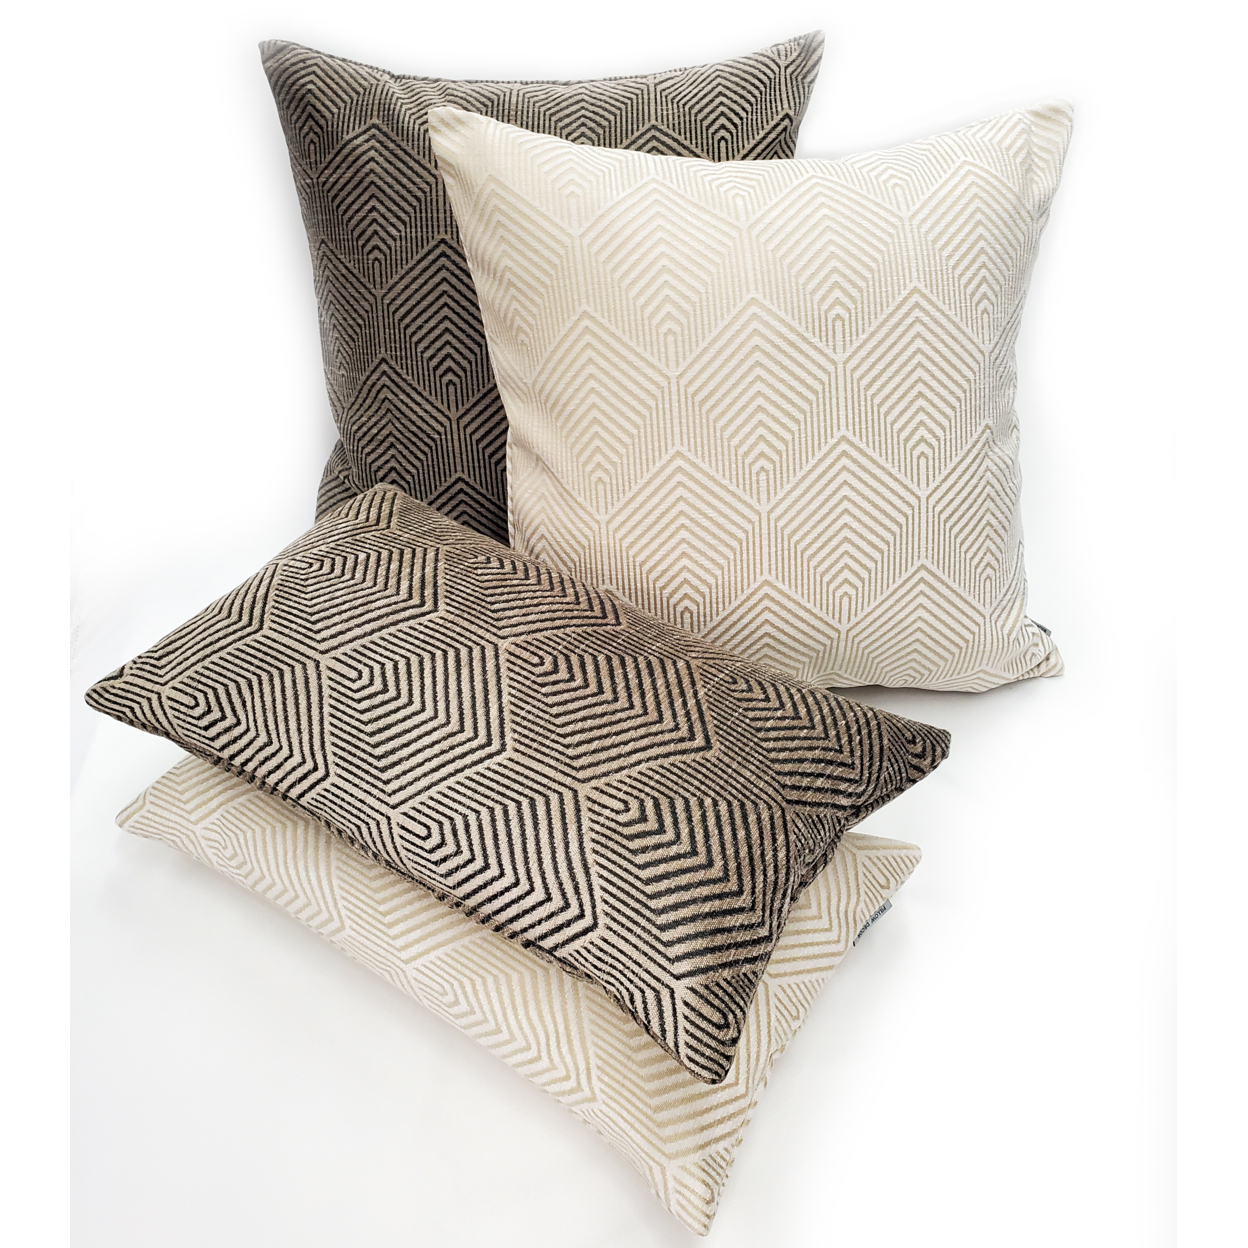 Sahara Taupe Textured Throw Pillow 12x20, With Polyfill Insert